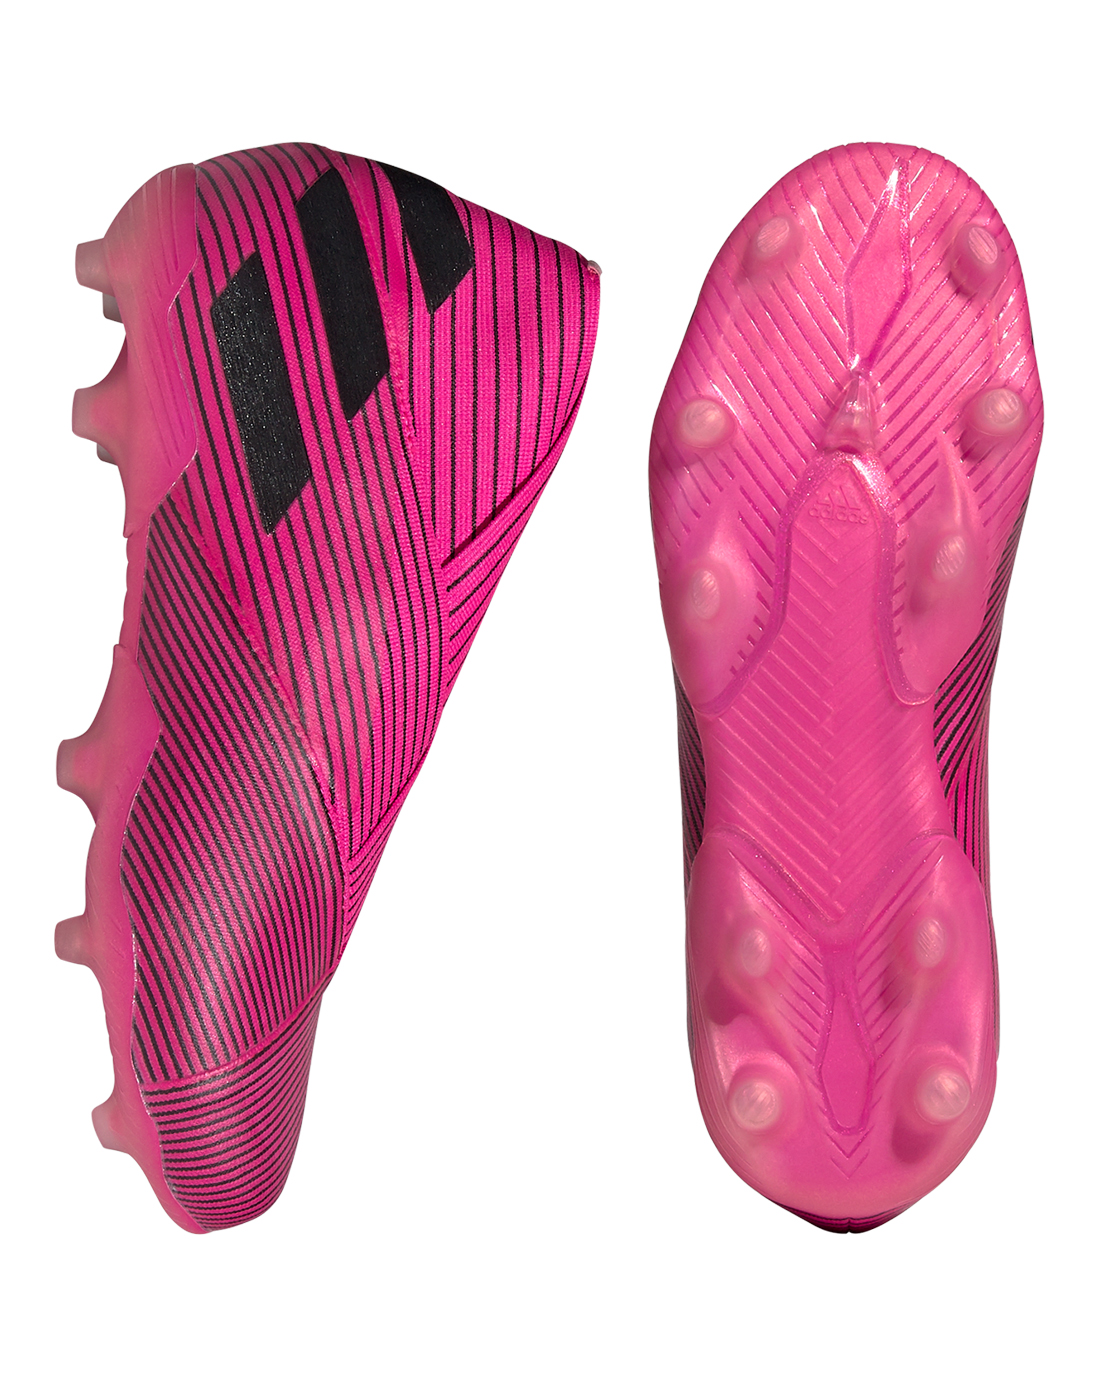 adidas nemeziz 19 fg pink